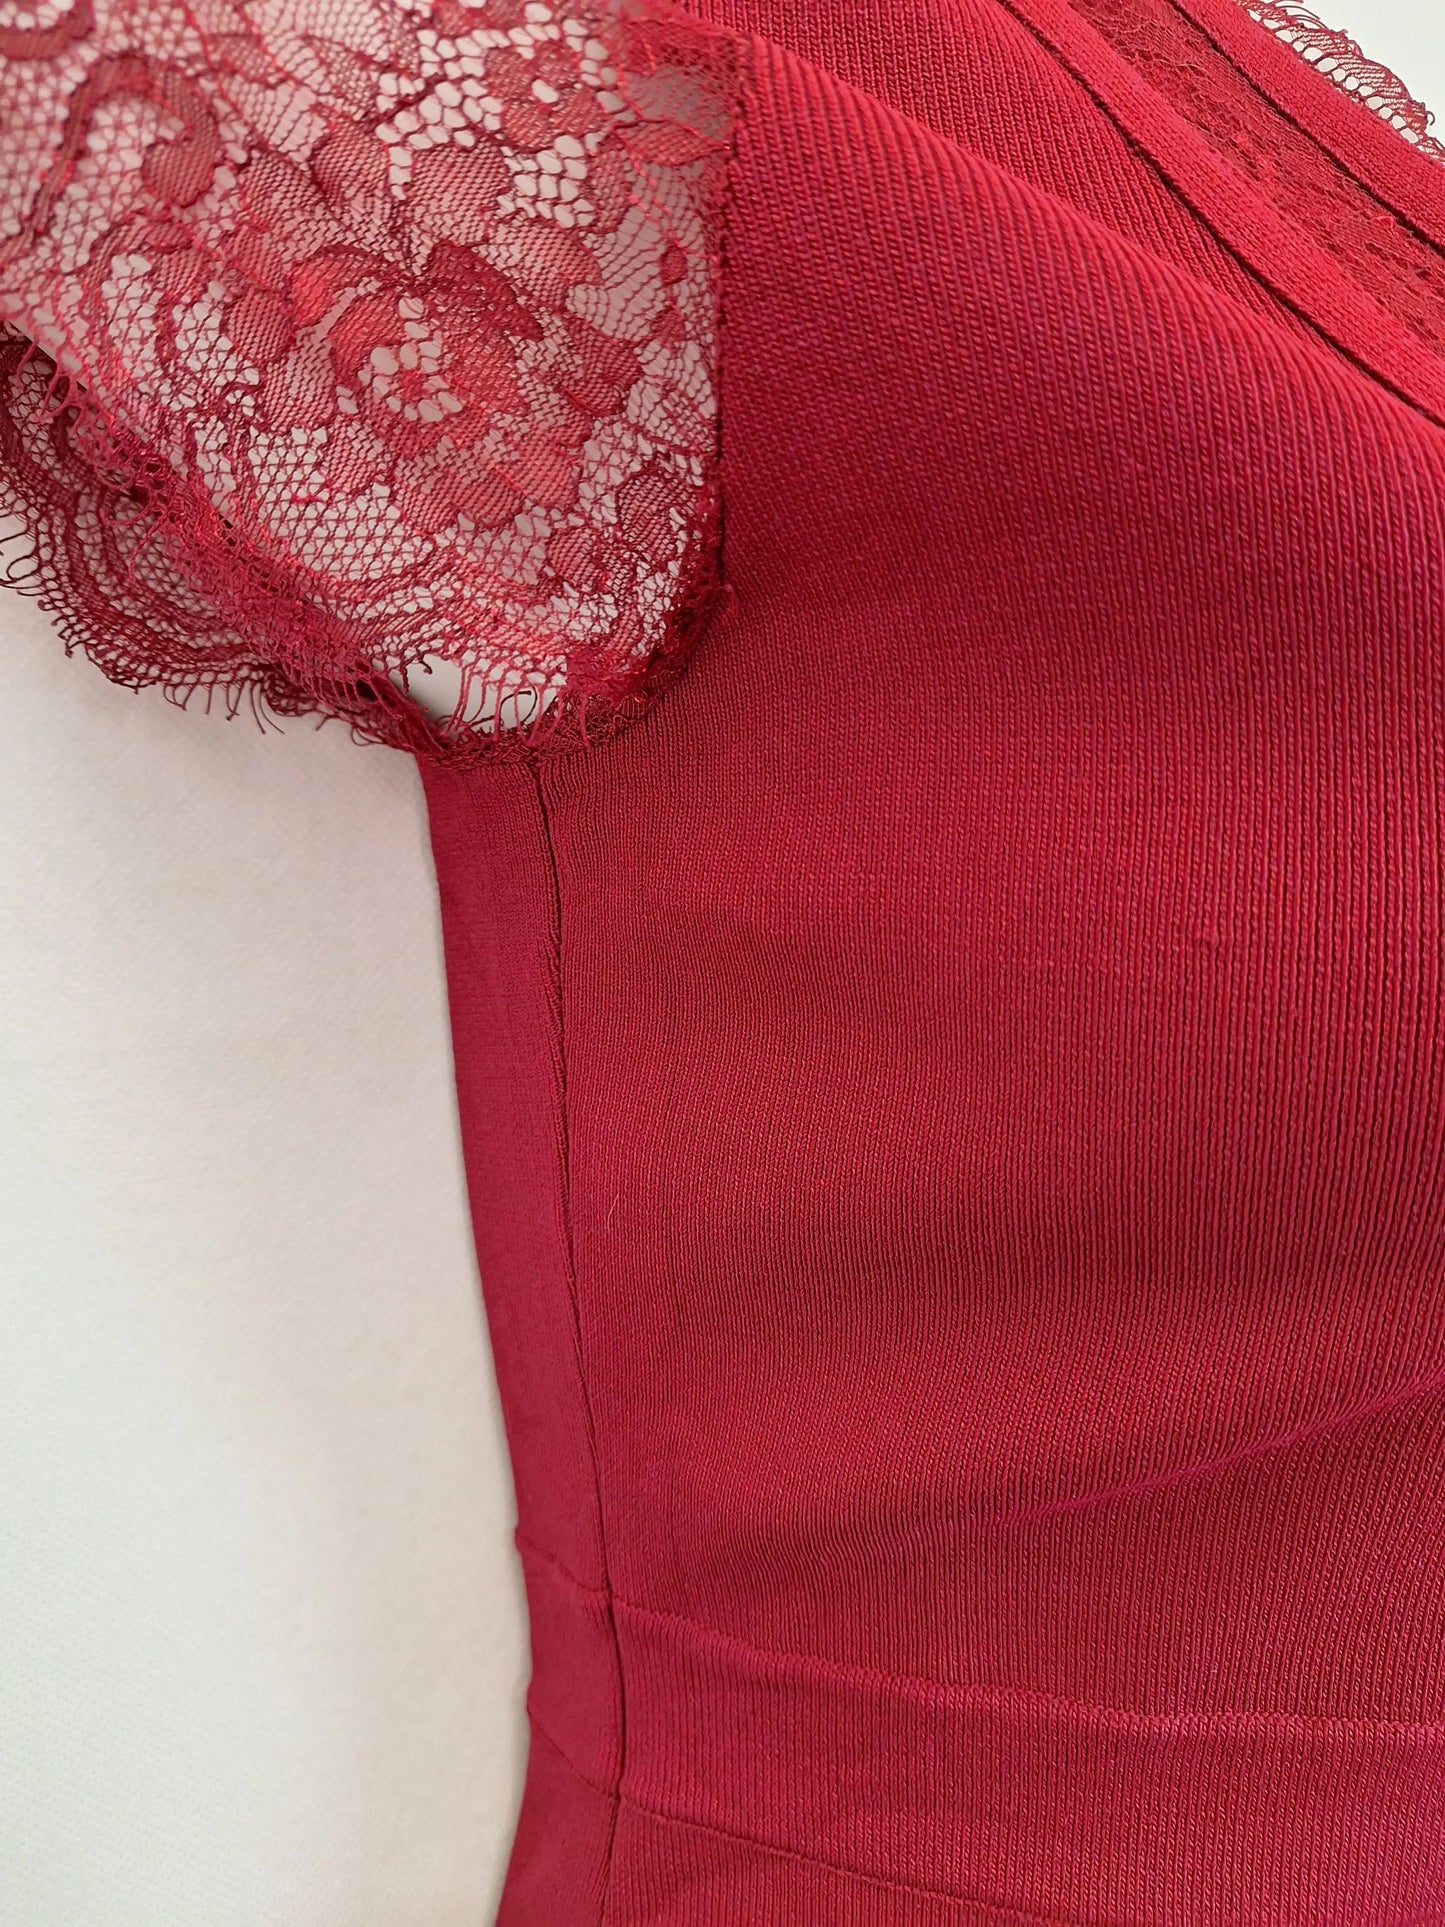 Karen Millen Burgundy Stretch Lace Detailed Mini Dress Size L by SwapUp-Online Second Hand Store-Online Thrift Store